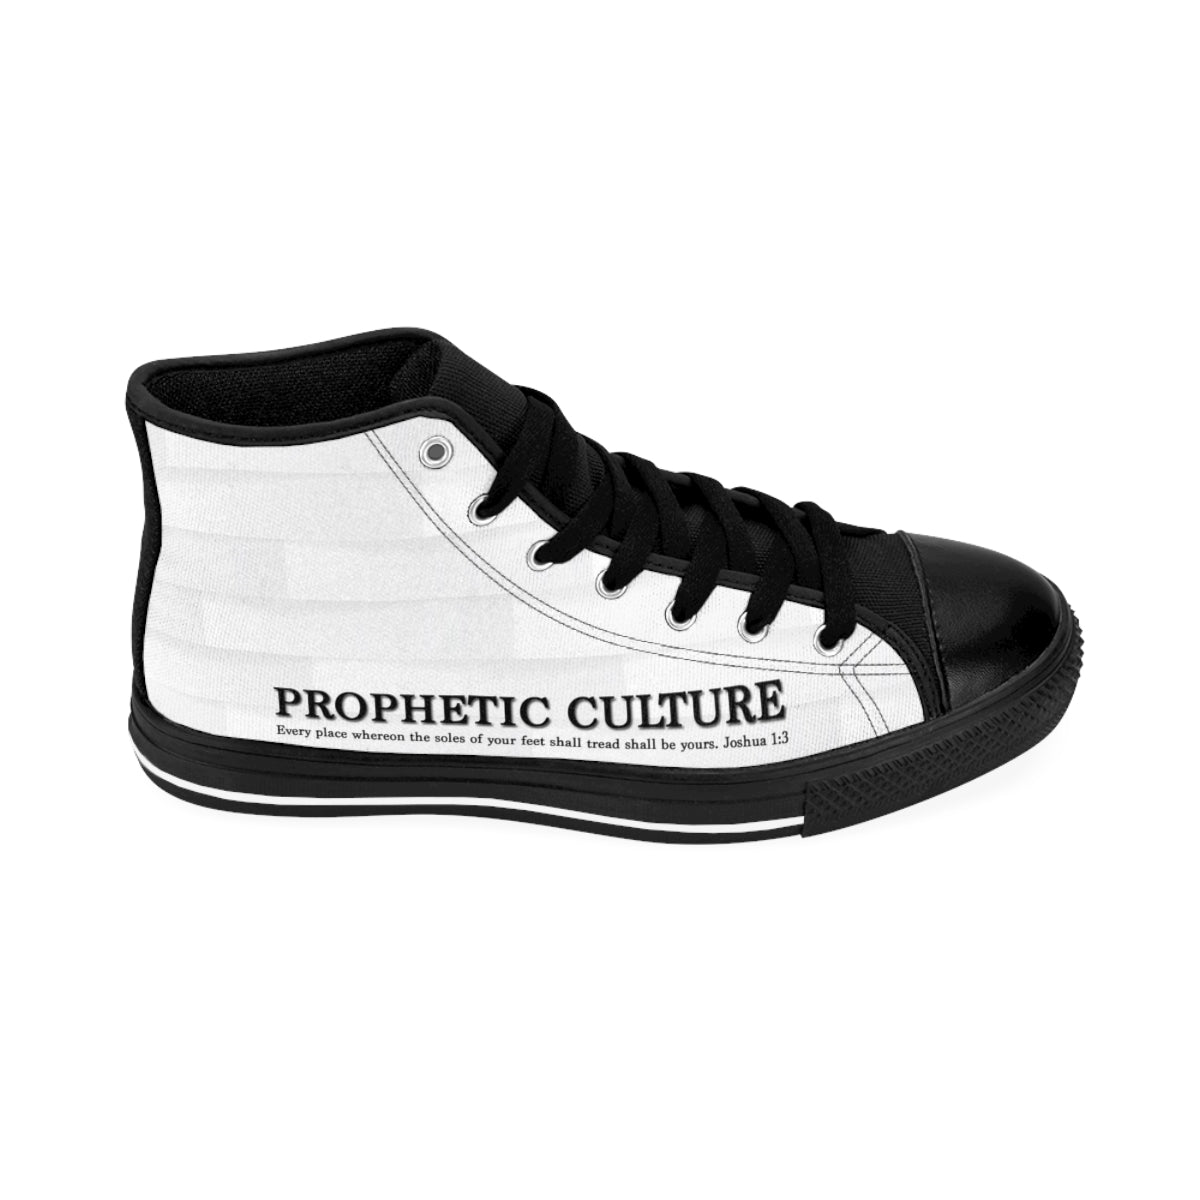 Prophetic Culture Sneakers Black & White